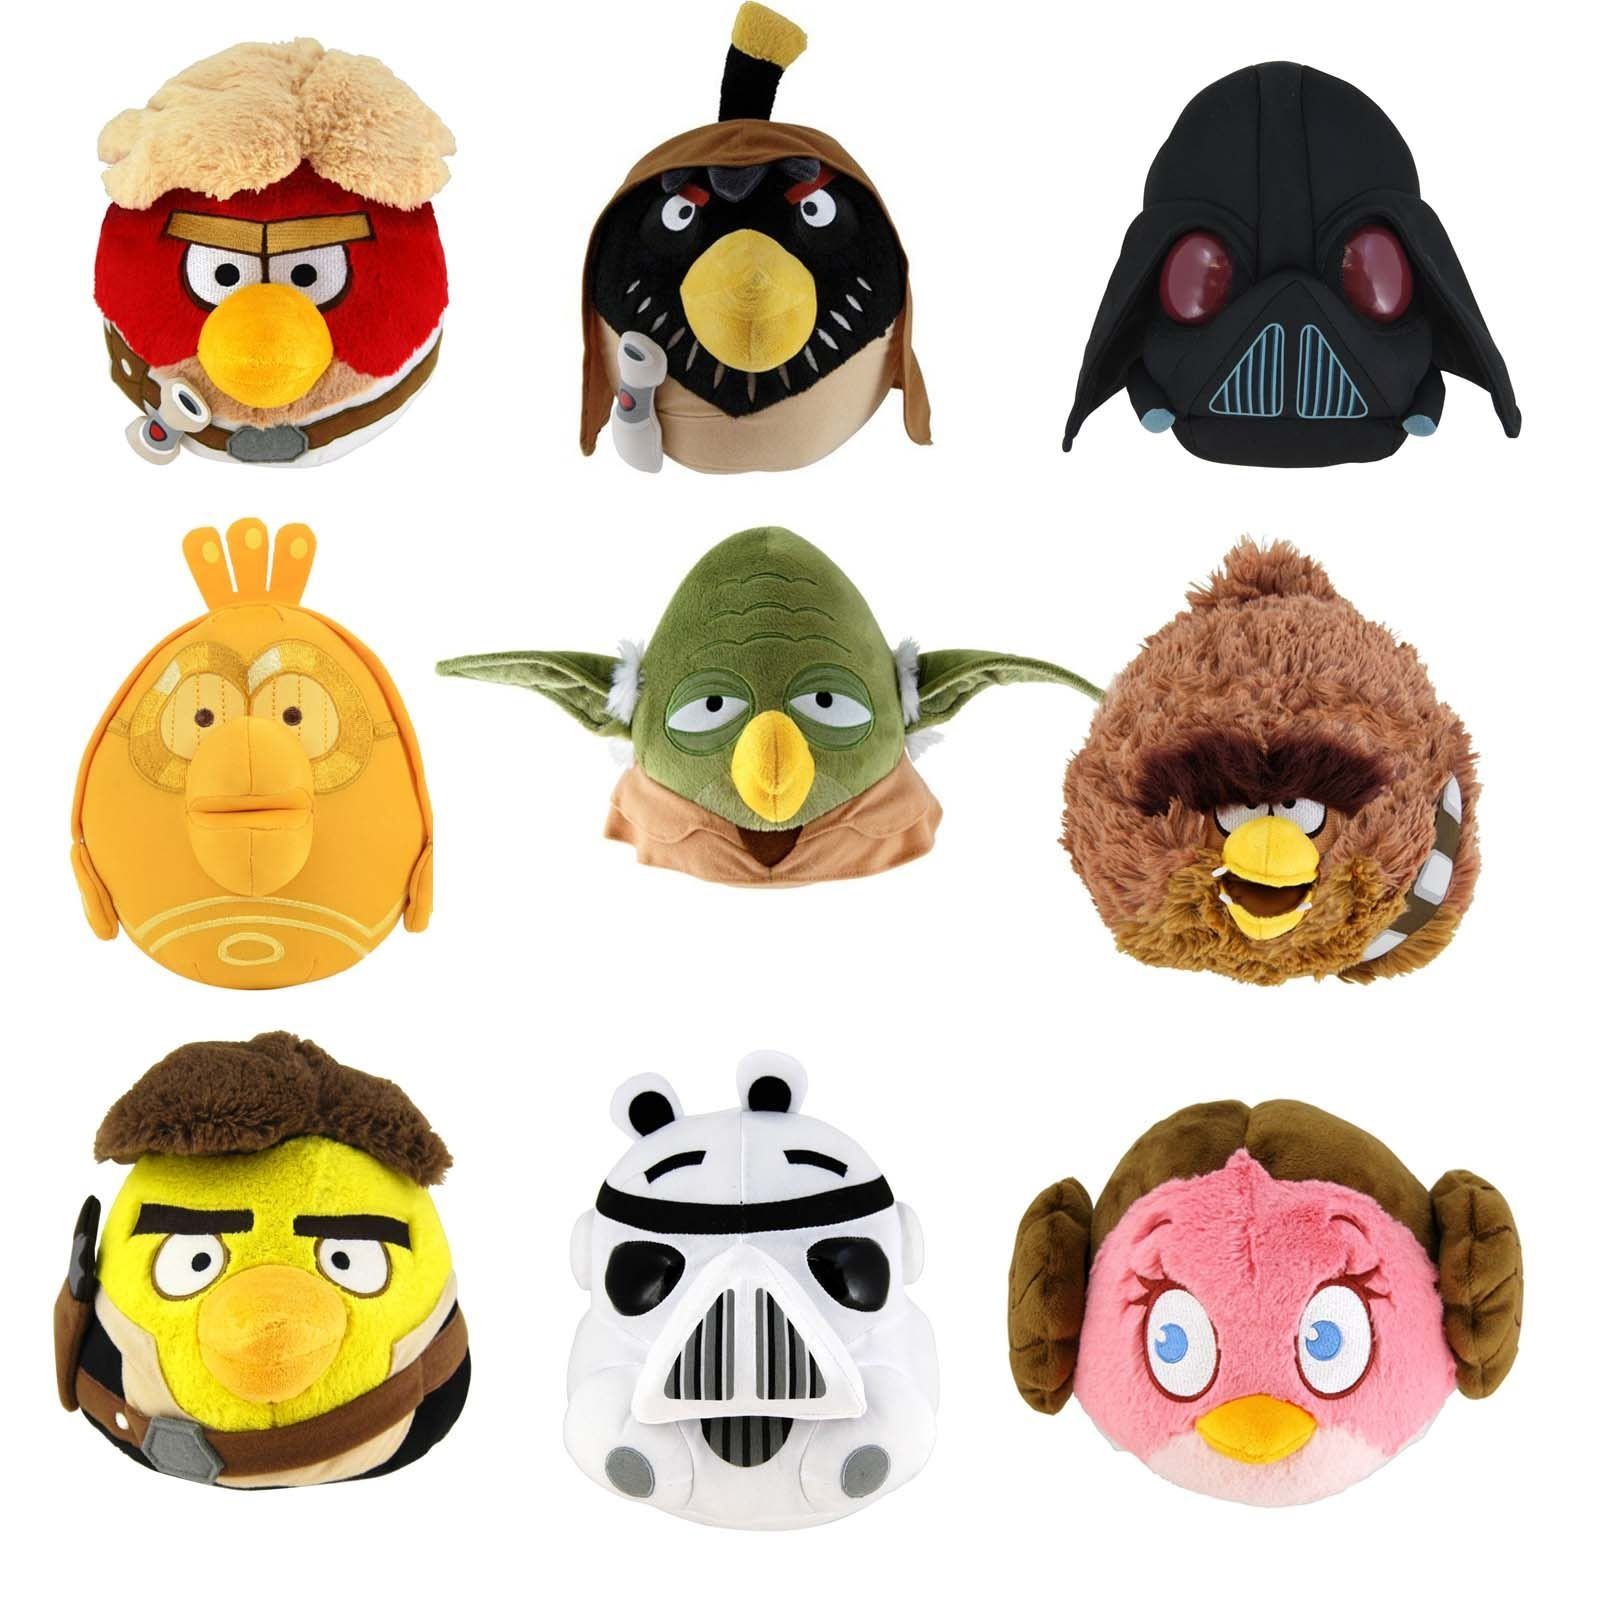 Darth Vader - Kolekcja Angry Birds STAR WARS.